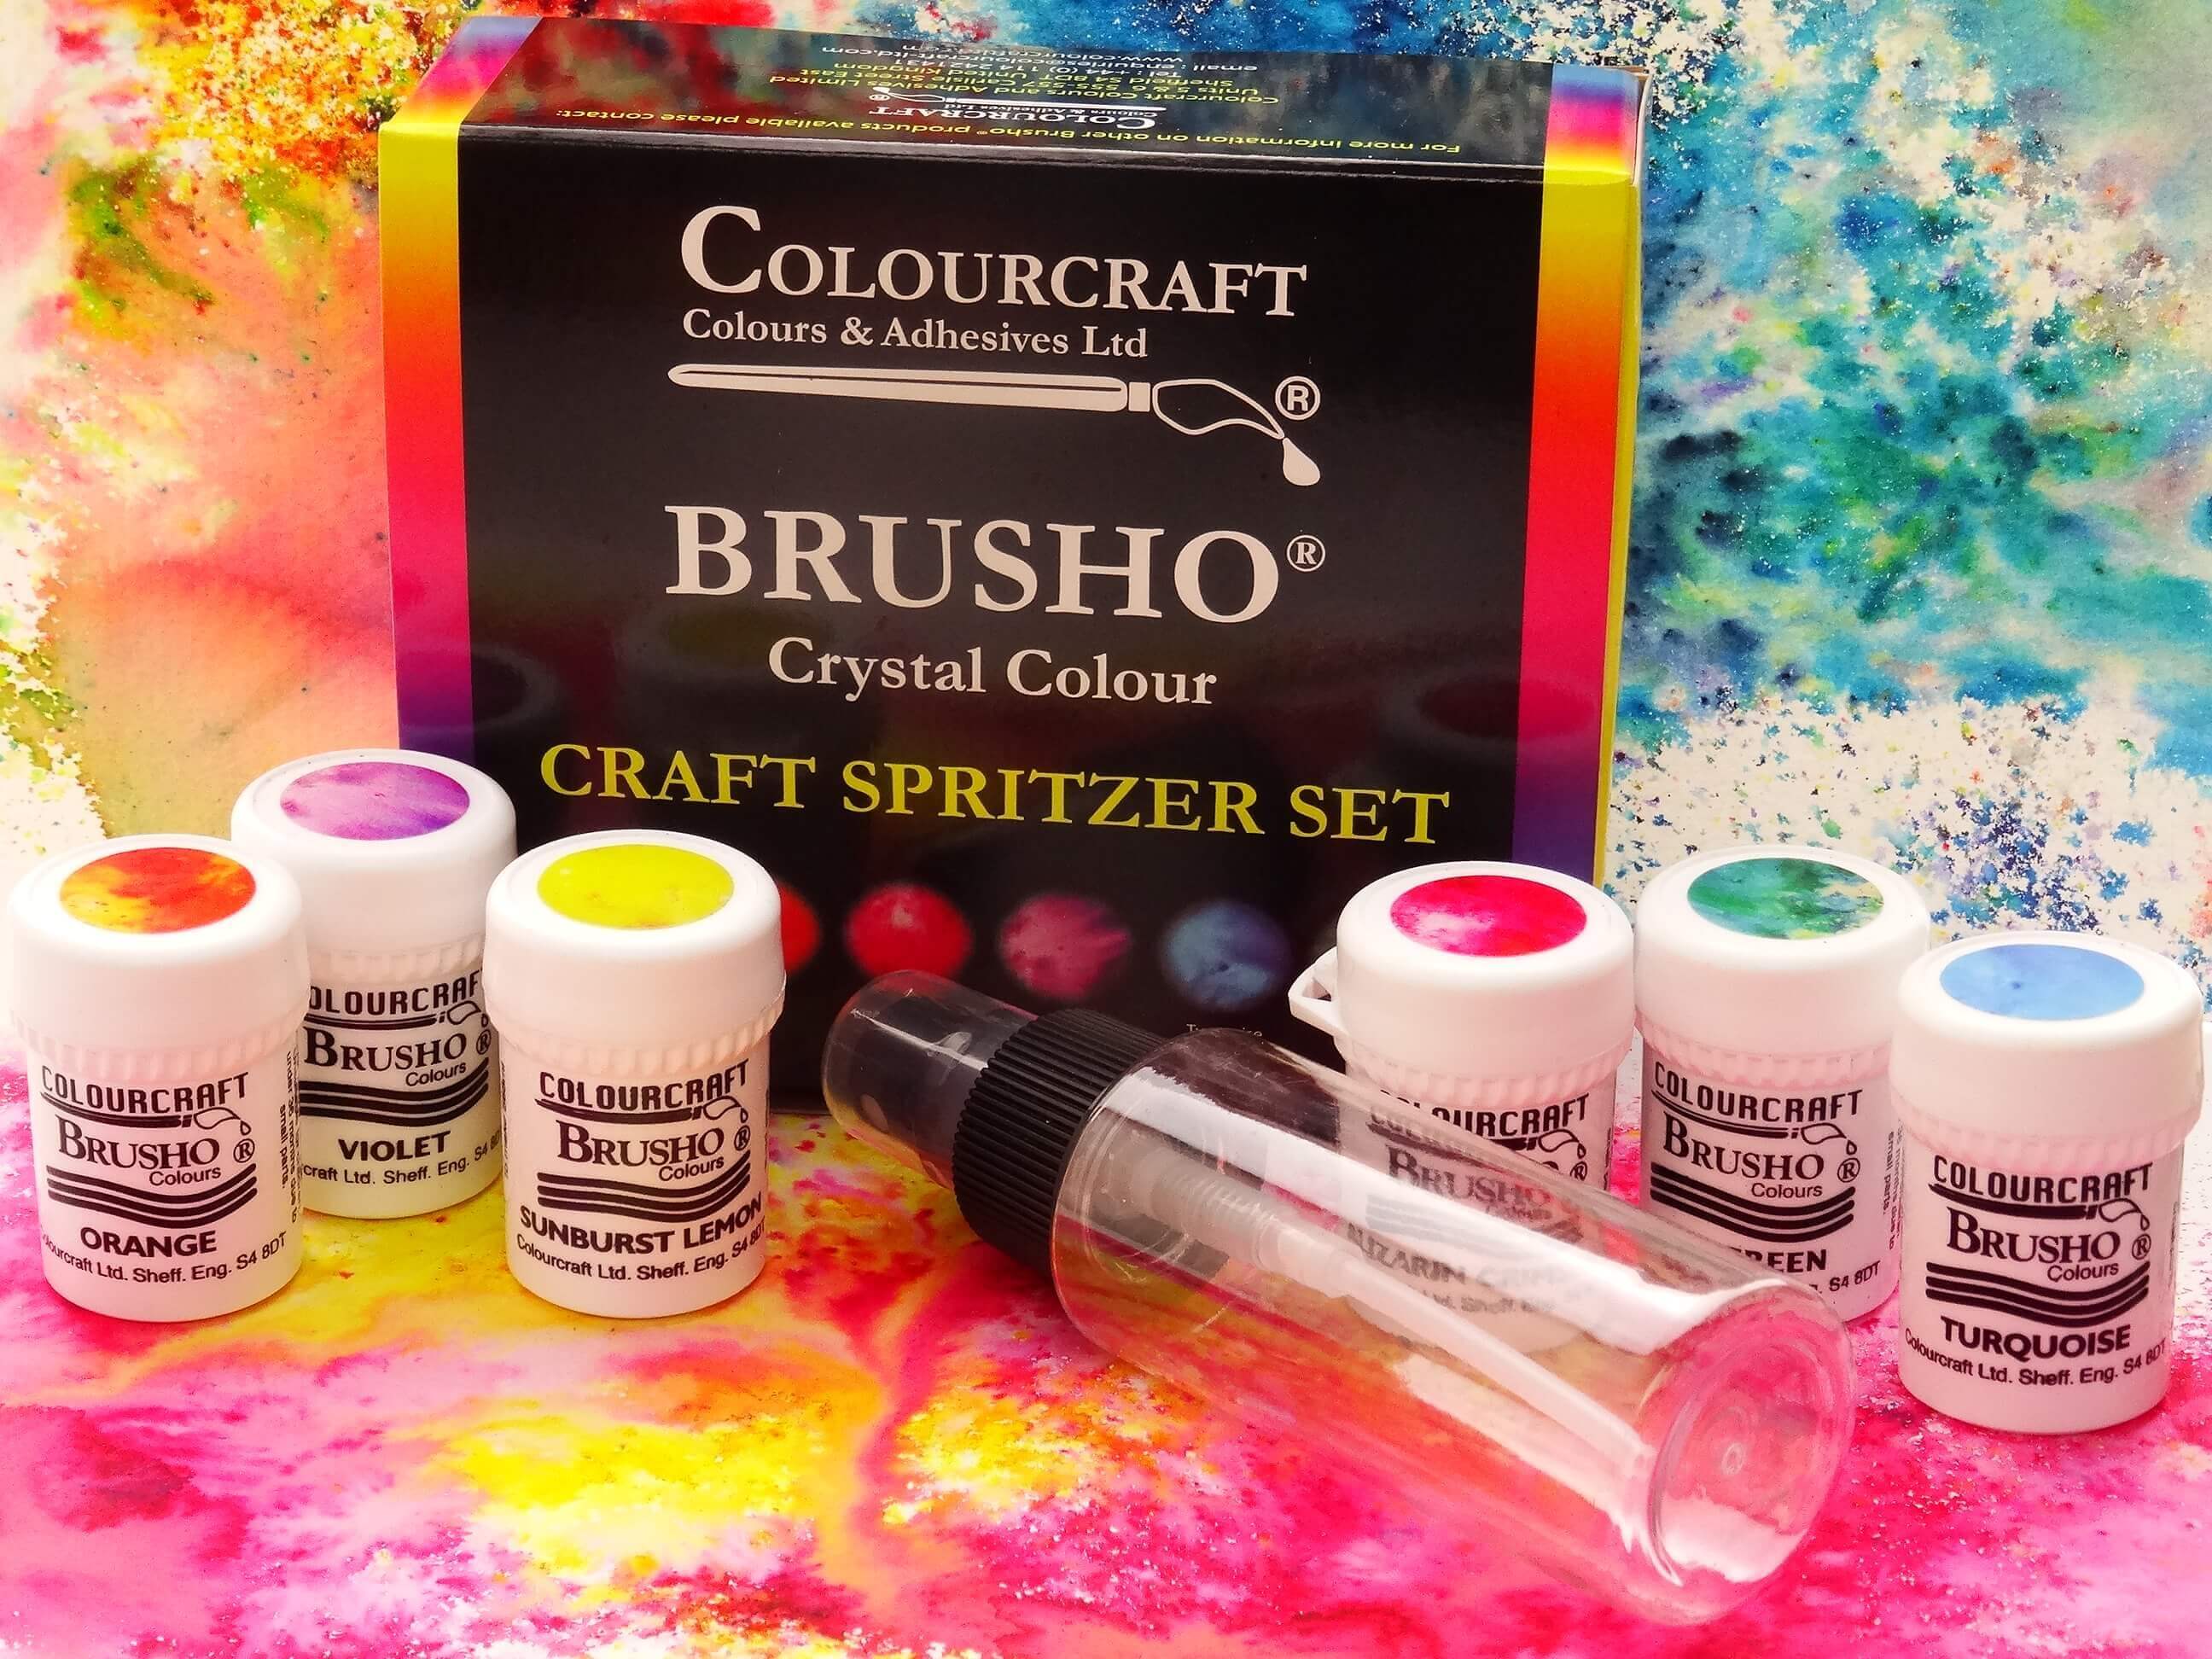 Brusho Fixed Assortment Craft Spritzer Set - 6 x 15g